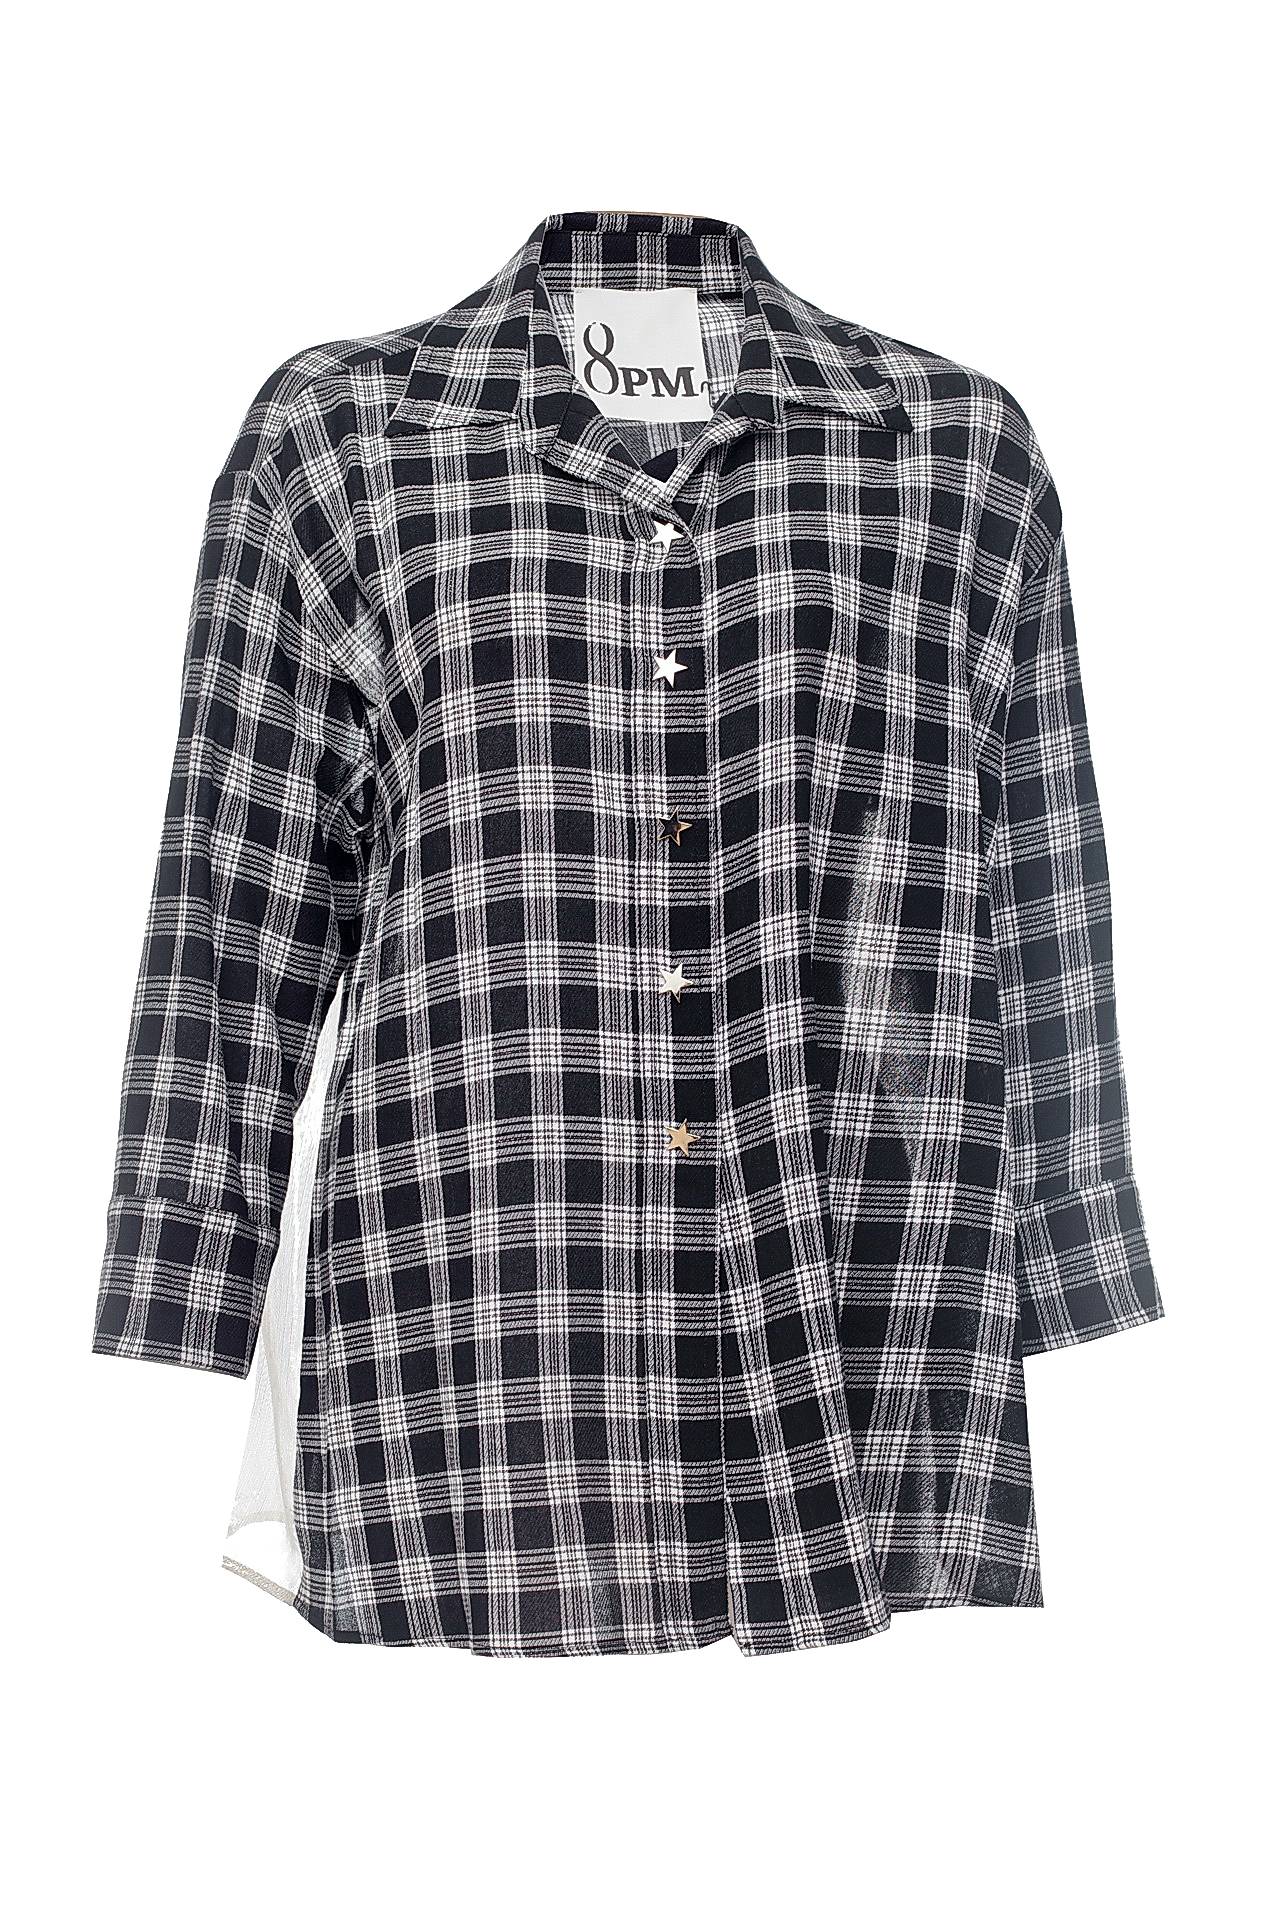 Одежда женская Рубашка 8PM (8PM62C16/17.1). Купить за 9750 руб.